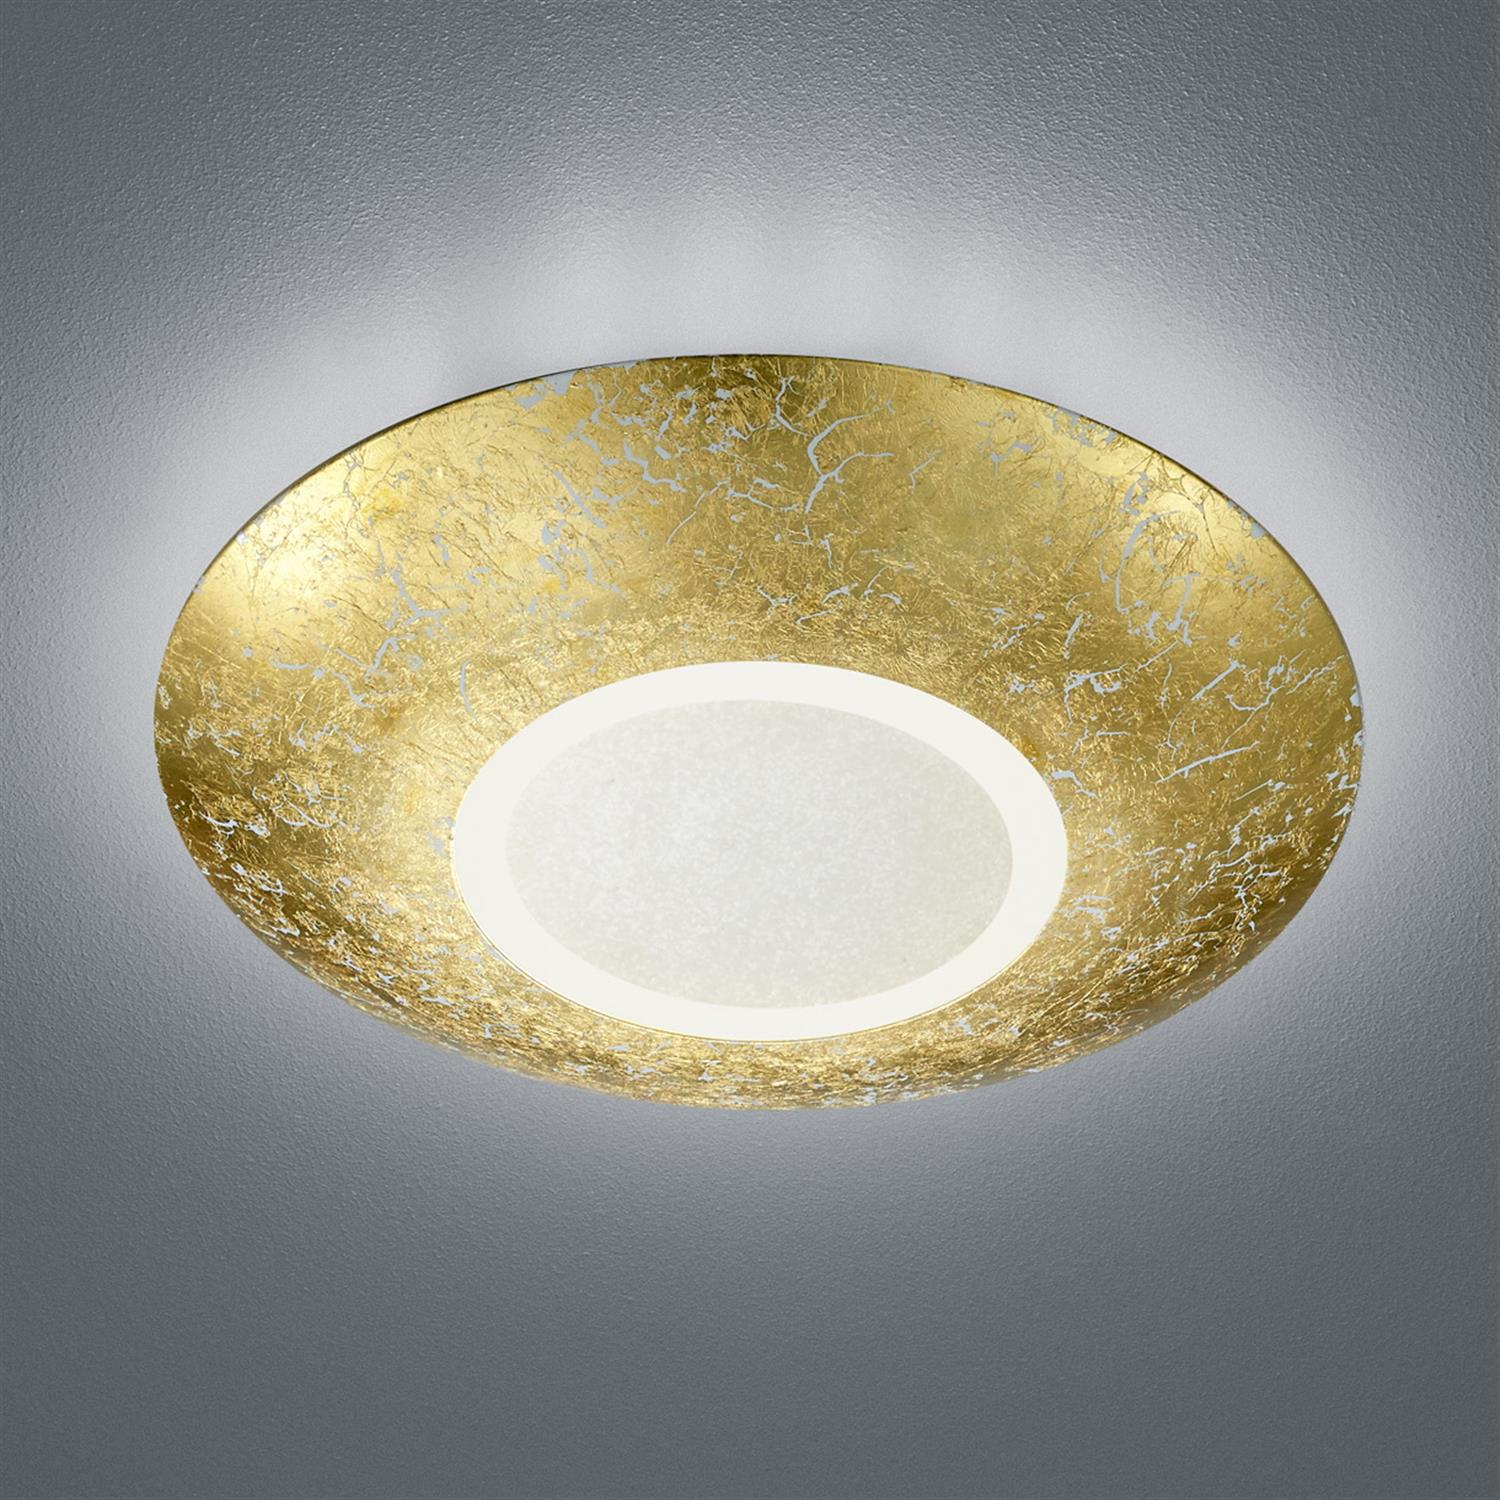 Chiros Gold Leaf Effect LED Ceiling Light 624110279 | The Lighting ...